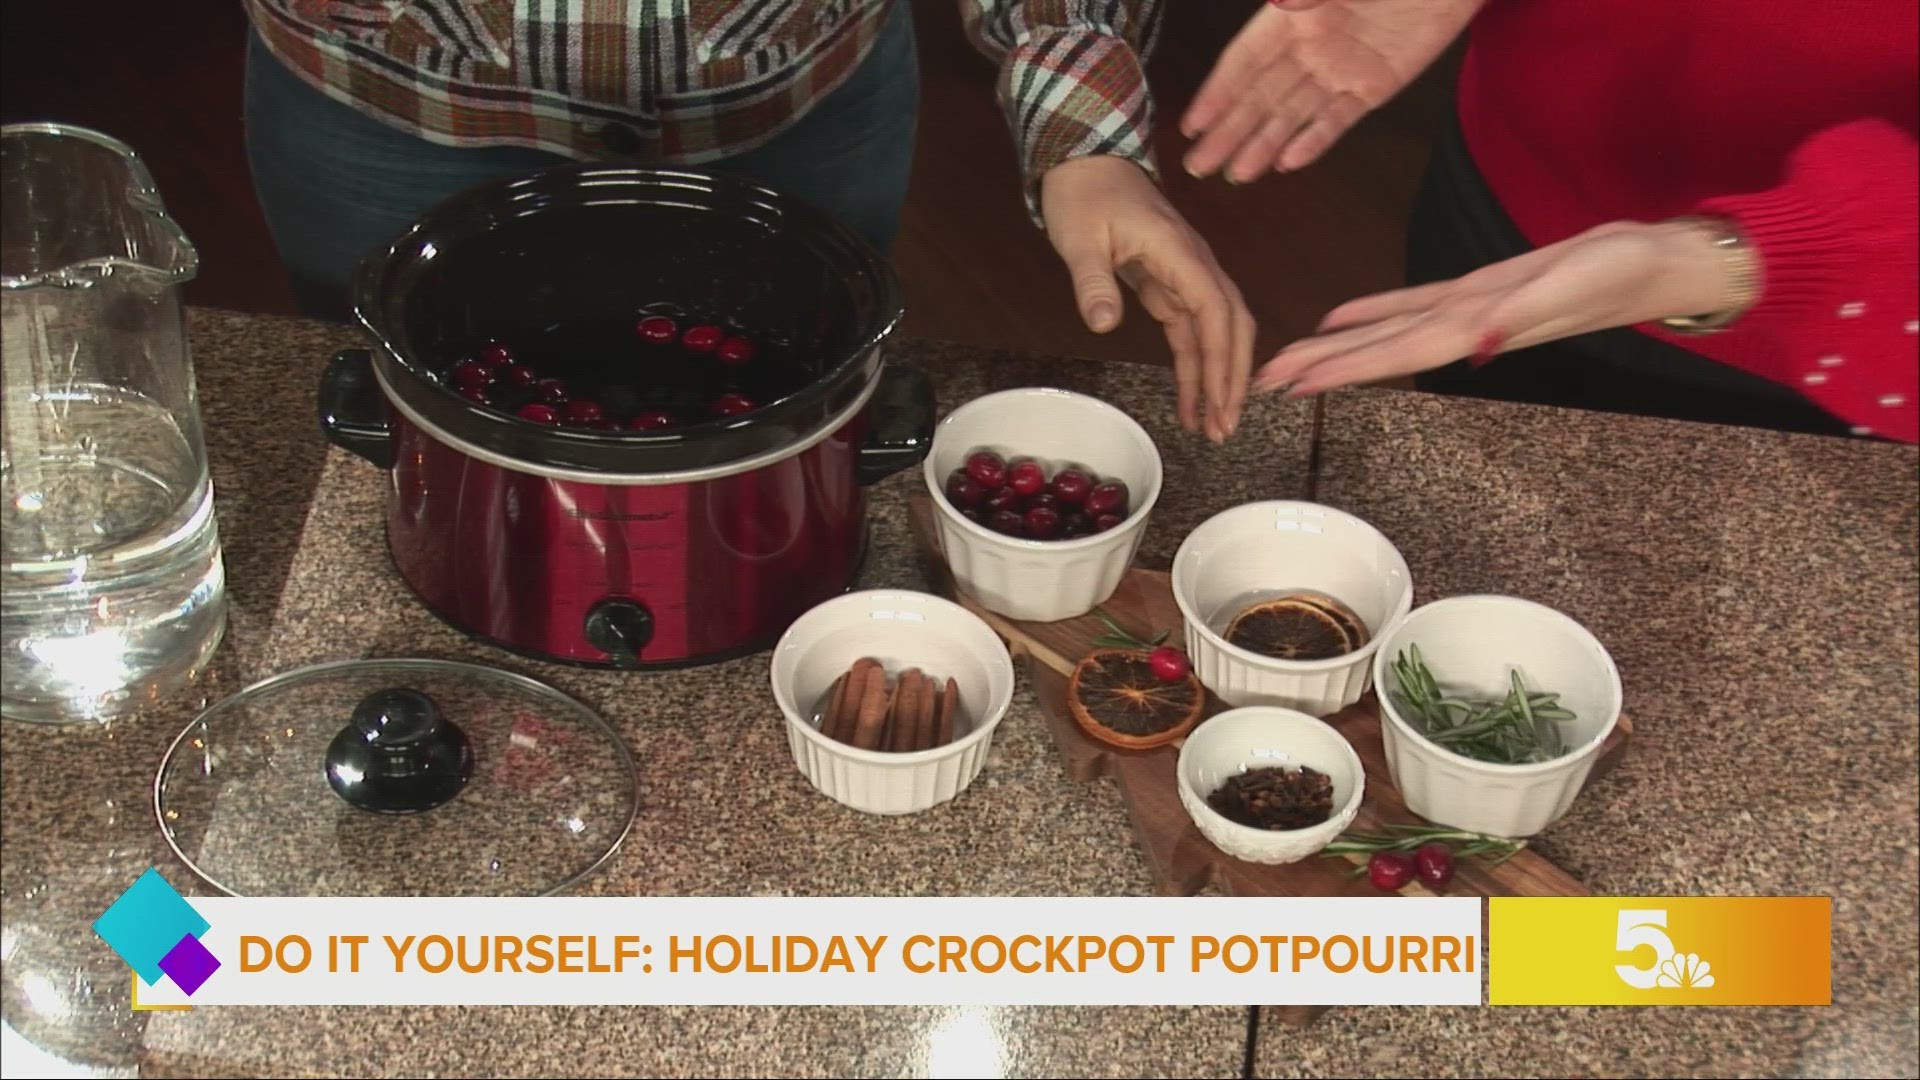 Do It Yourself: Holiday Crockpot Potpourri recipe